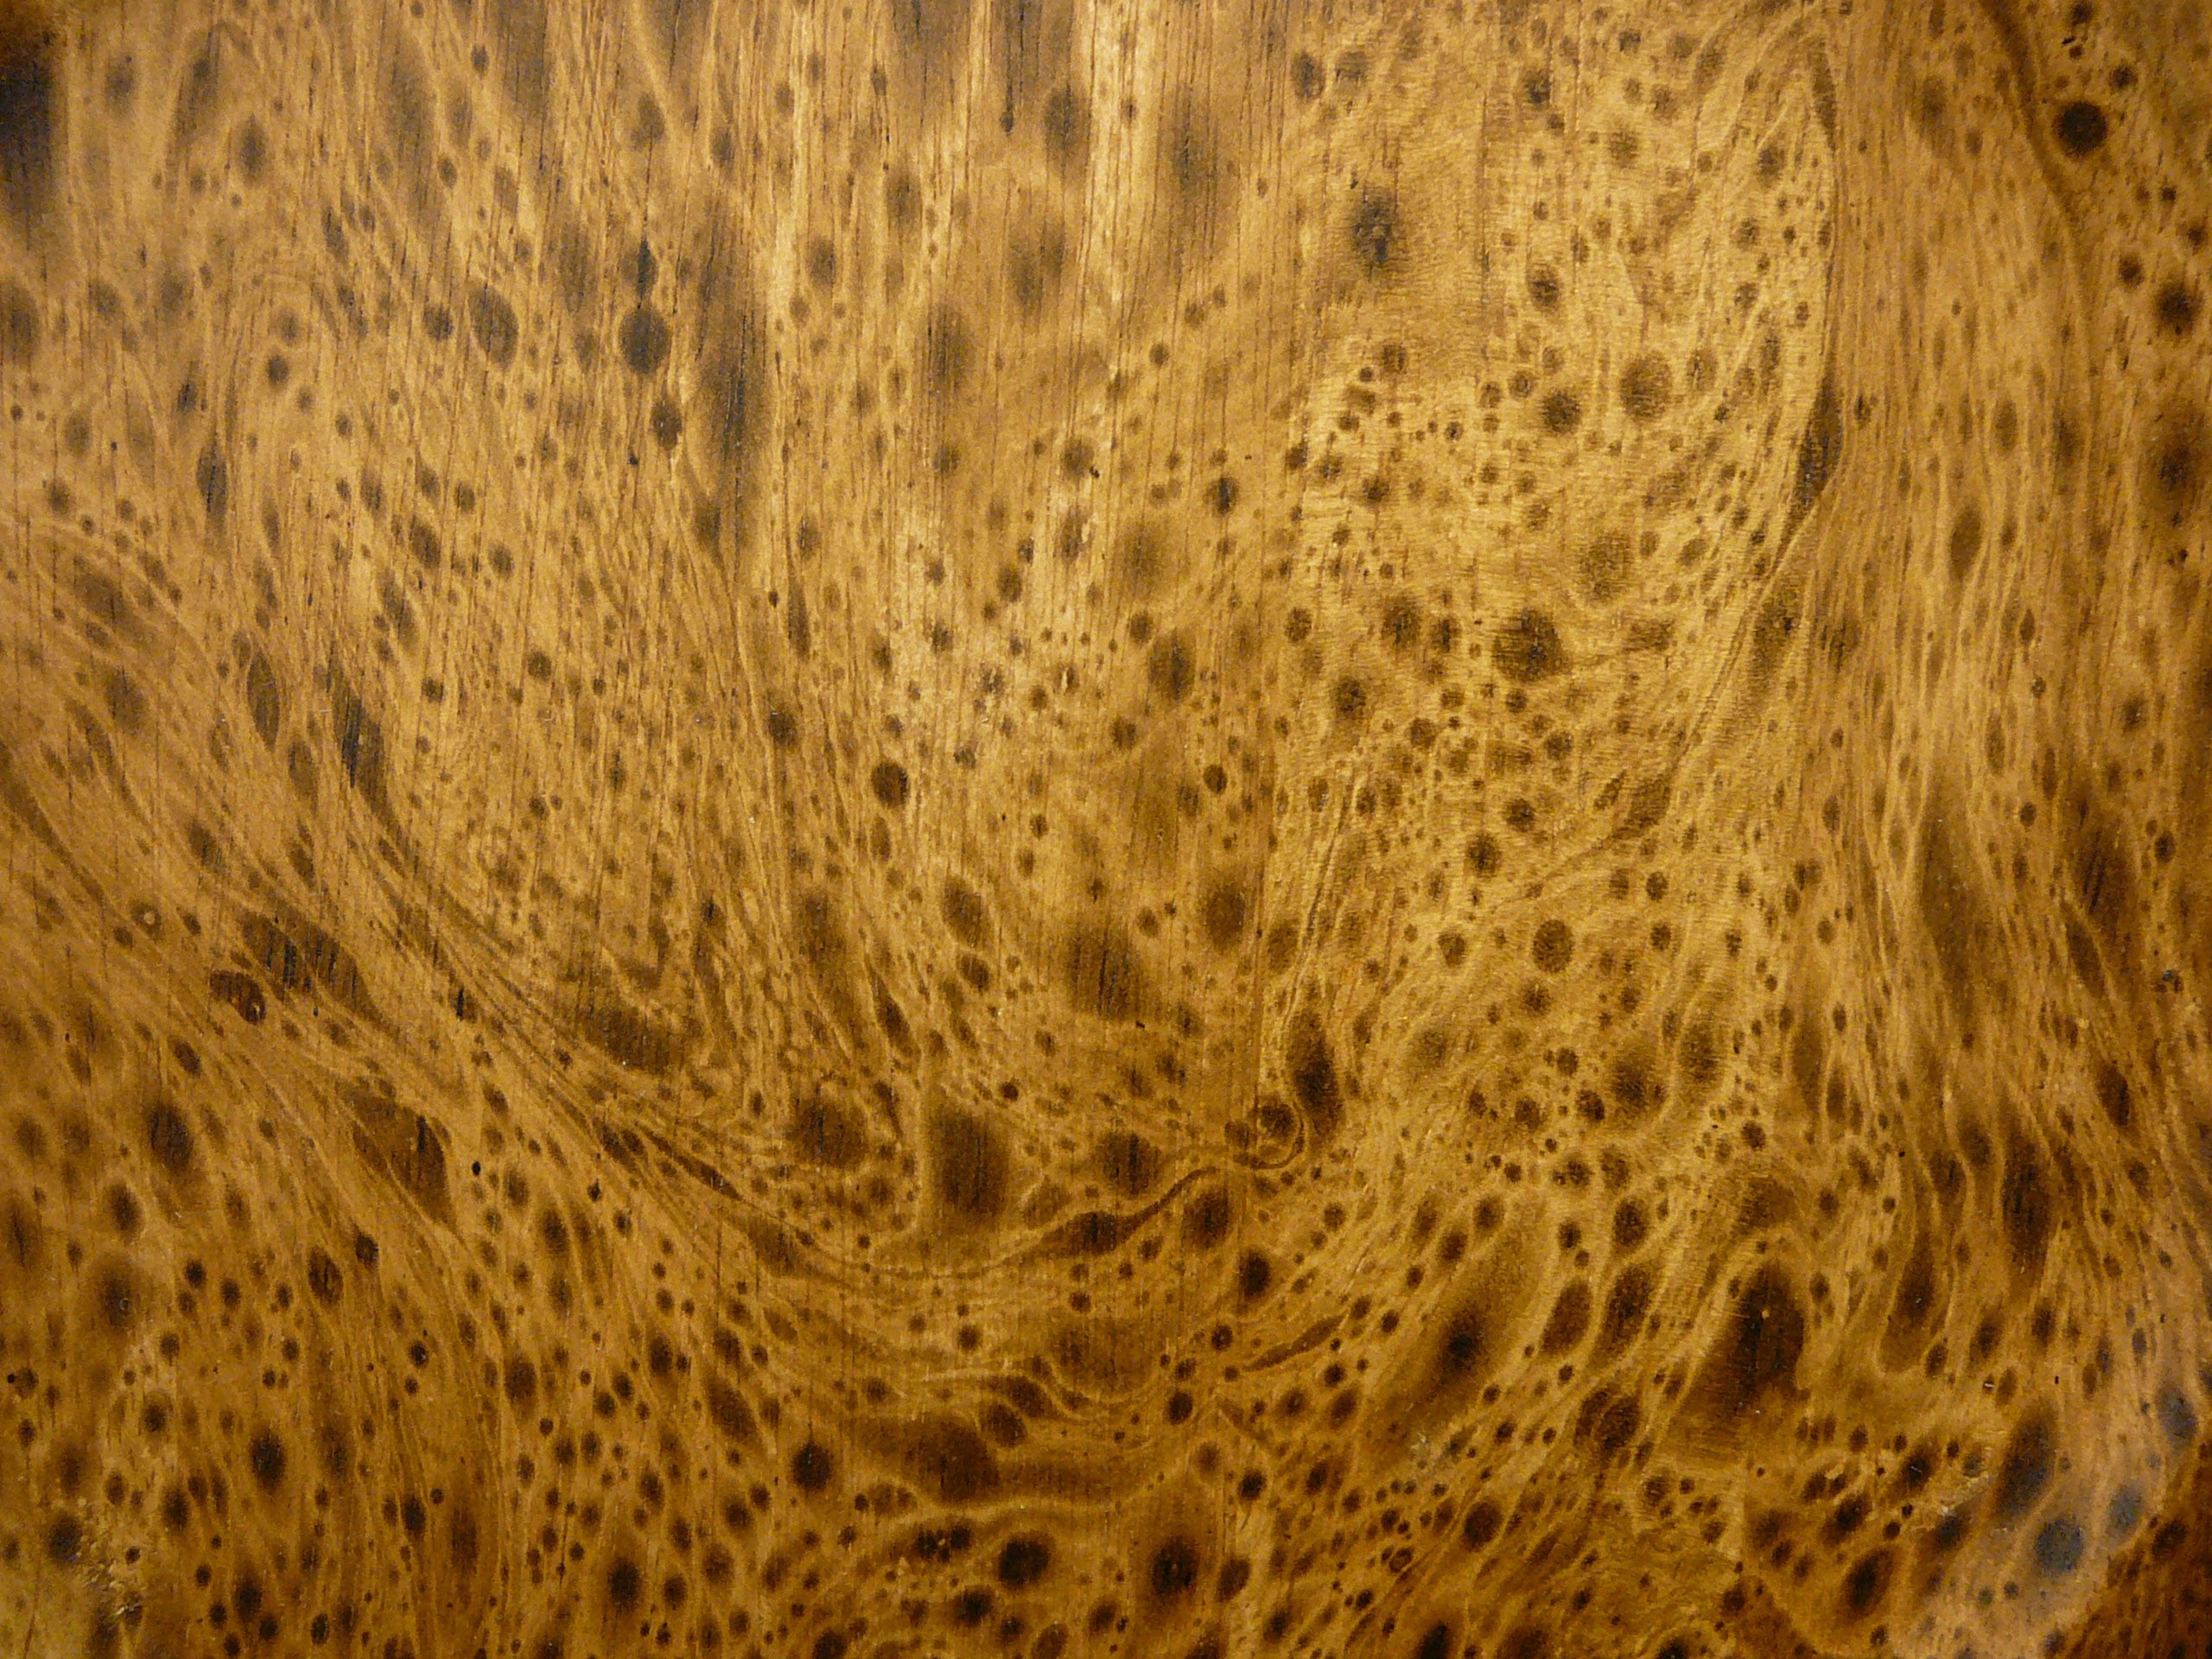 General 2560x1920 digital art wood texture brown